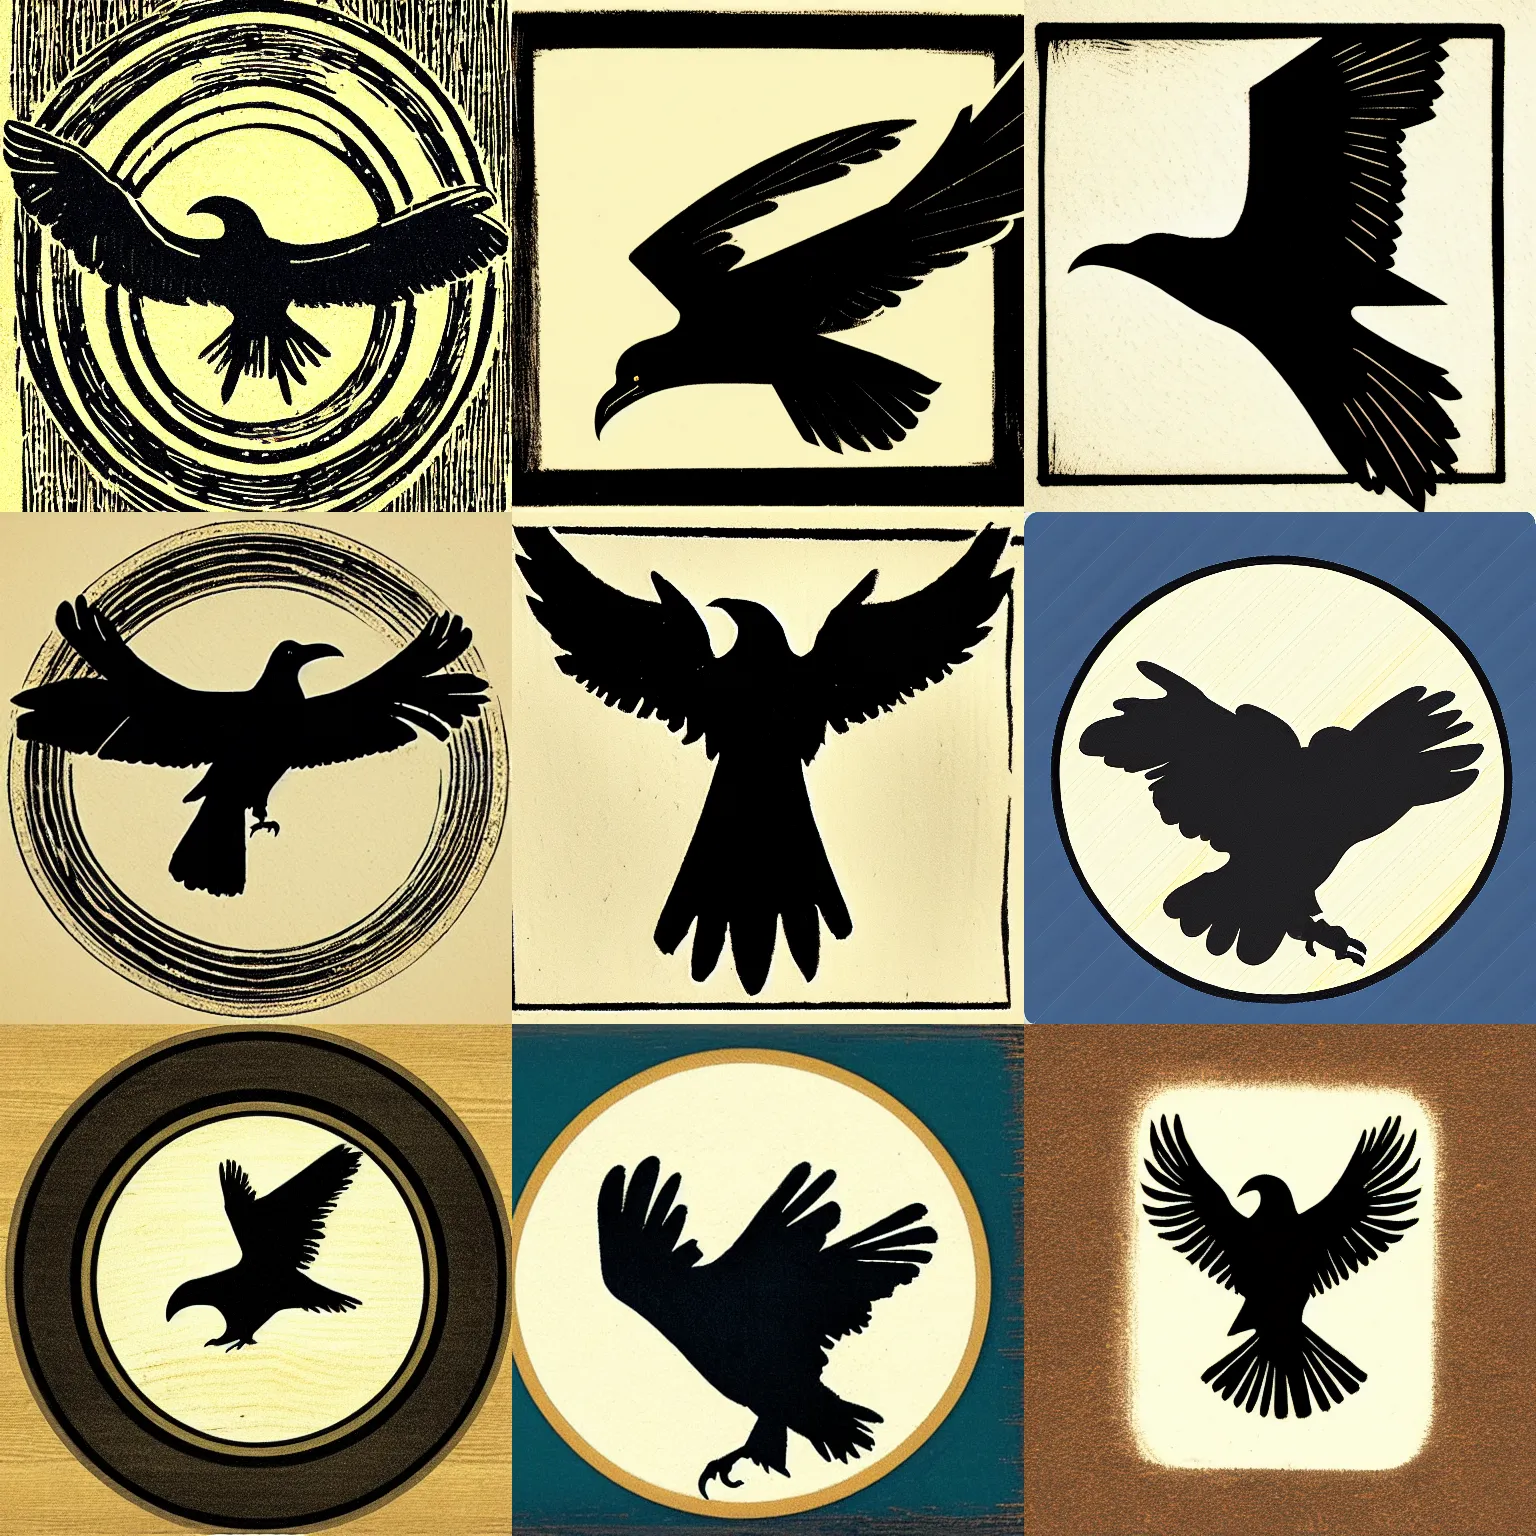 Prompt: tonalist woodcut of flying raven, corporate logo, icon, rondel